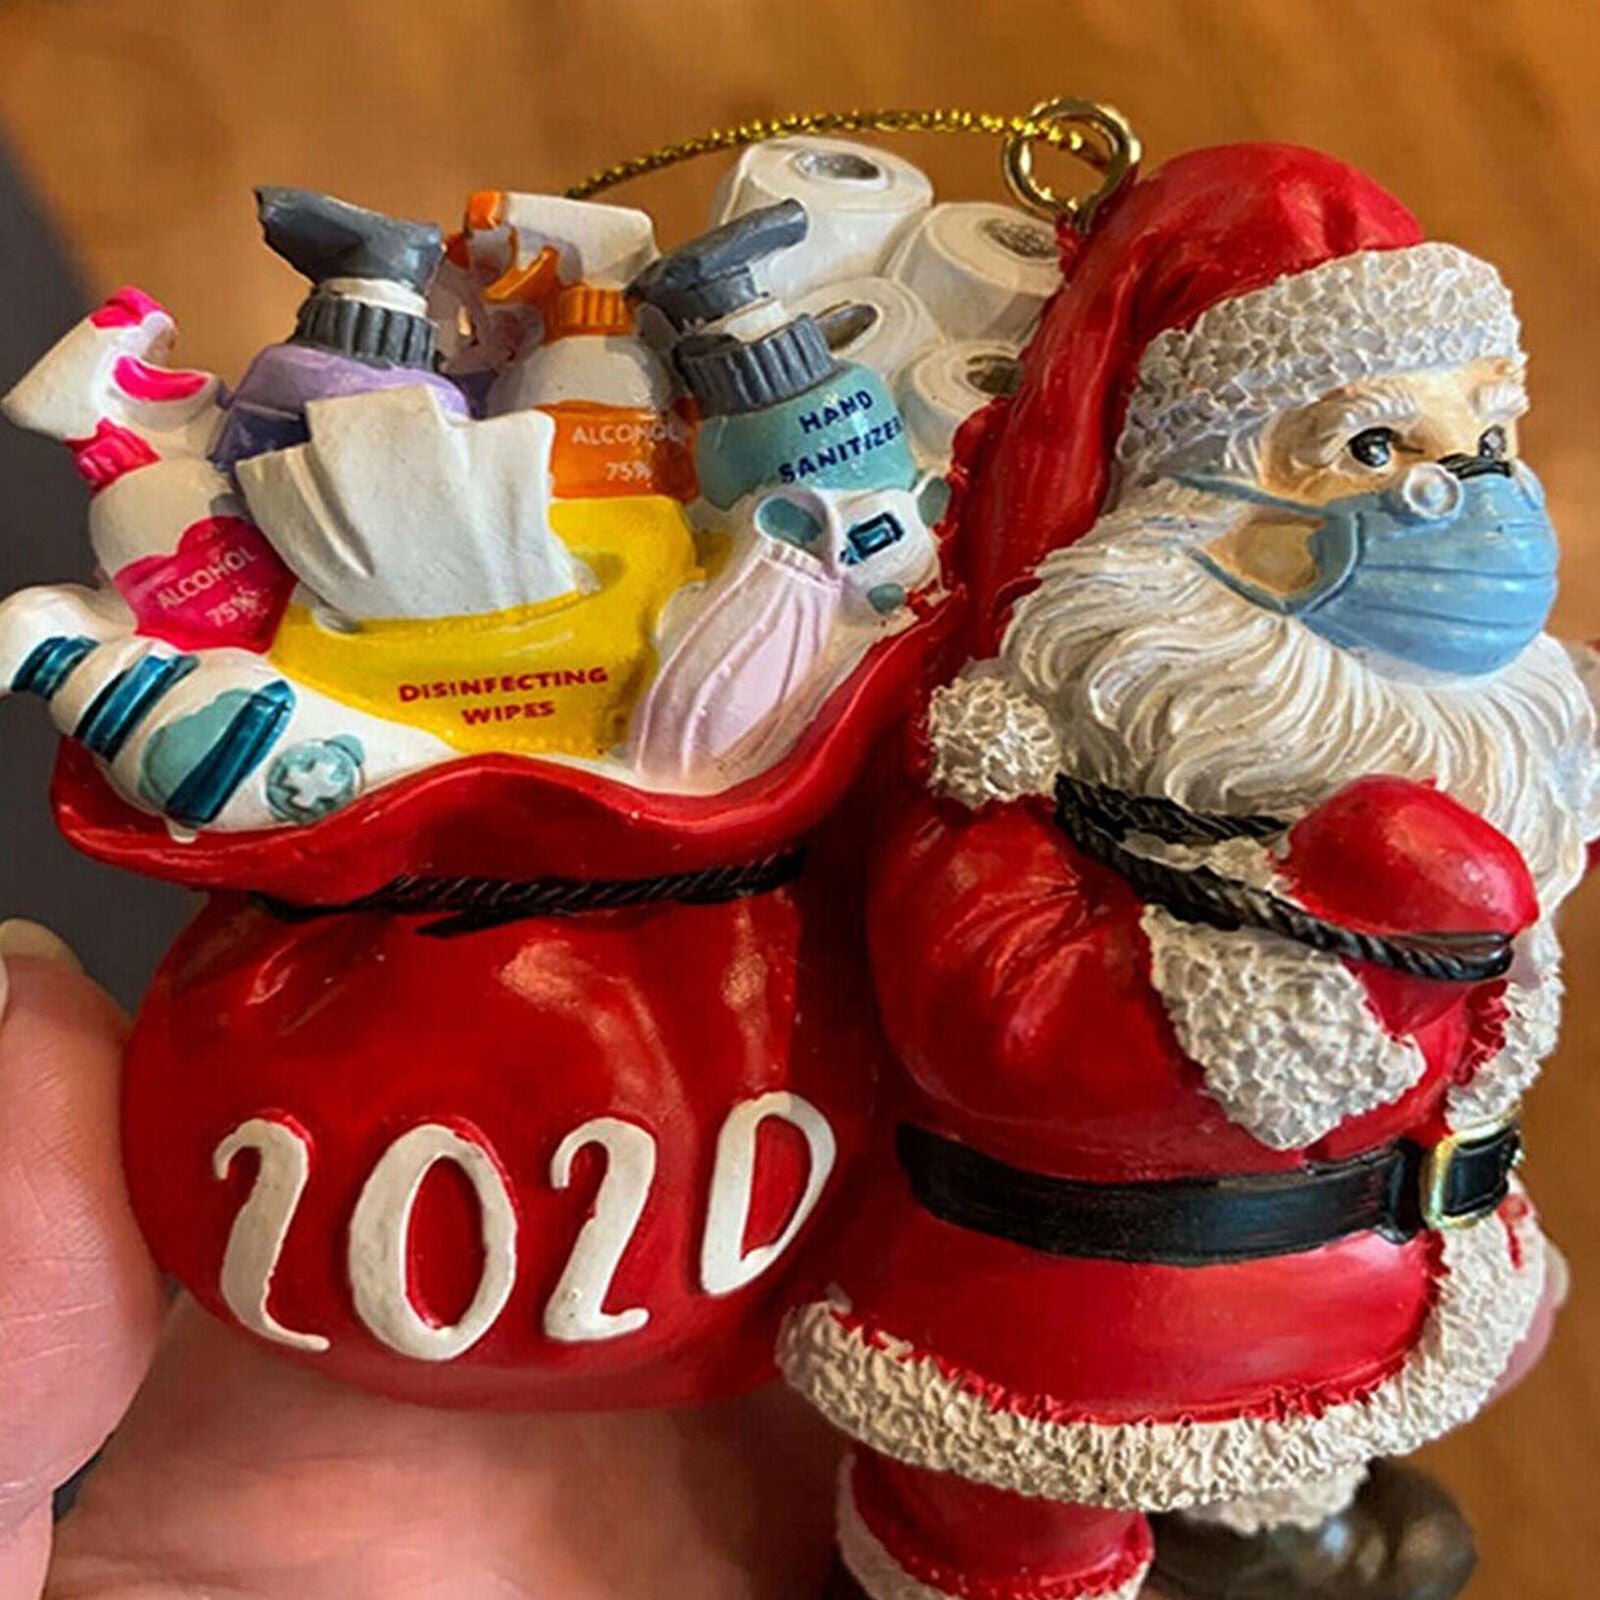 Christmas Tree Ornaments 2020 Santa Wearing Hanging Decor Creative Gifts